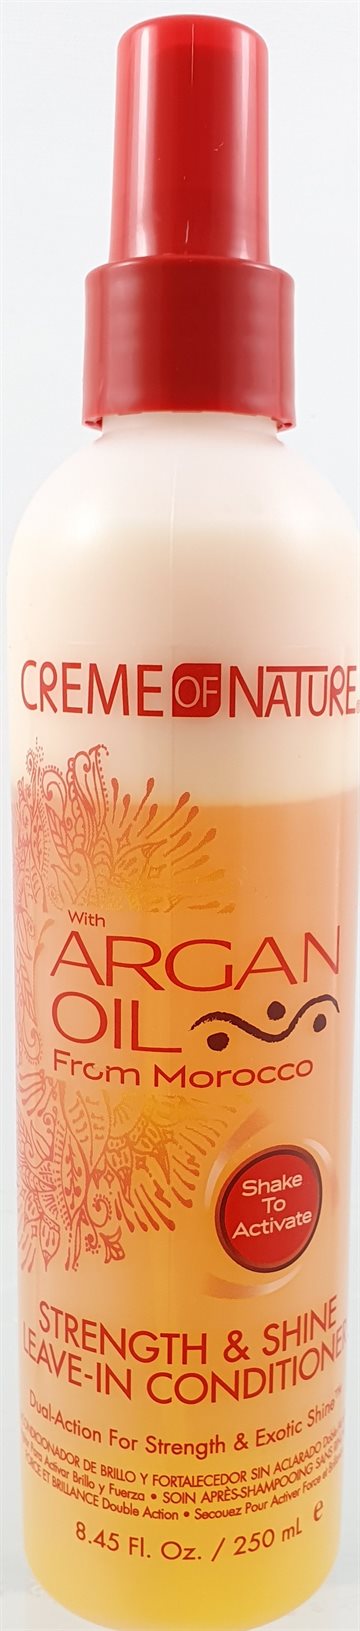 Creme of Nature - Argan Oil - Morocco 250 ml.